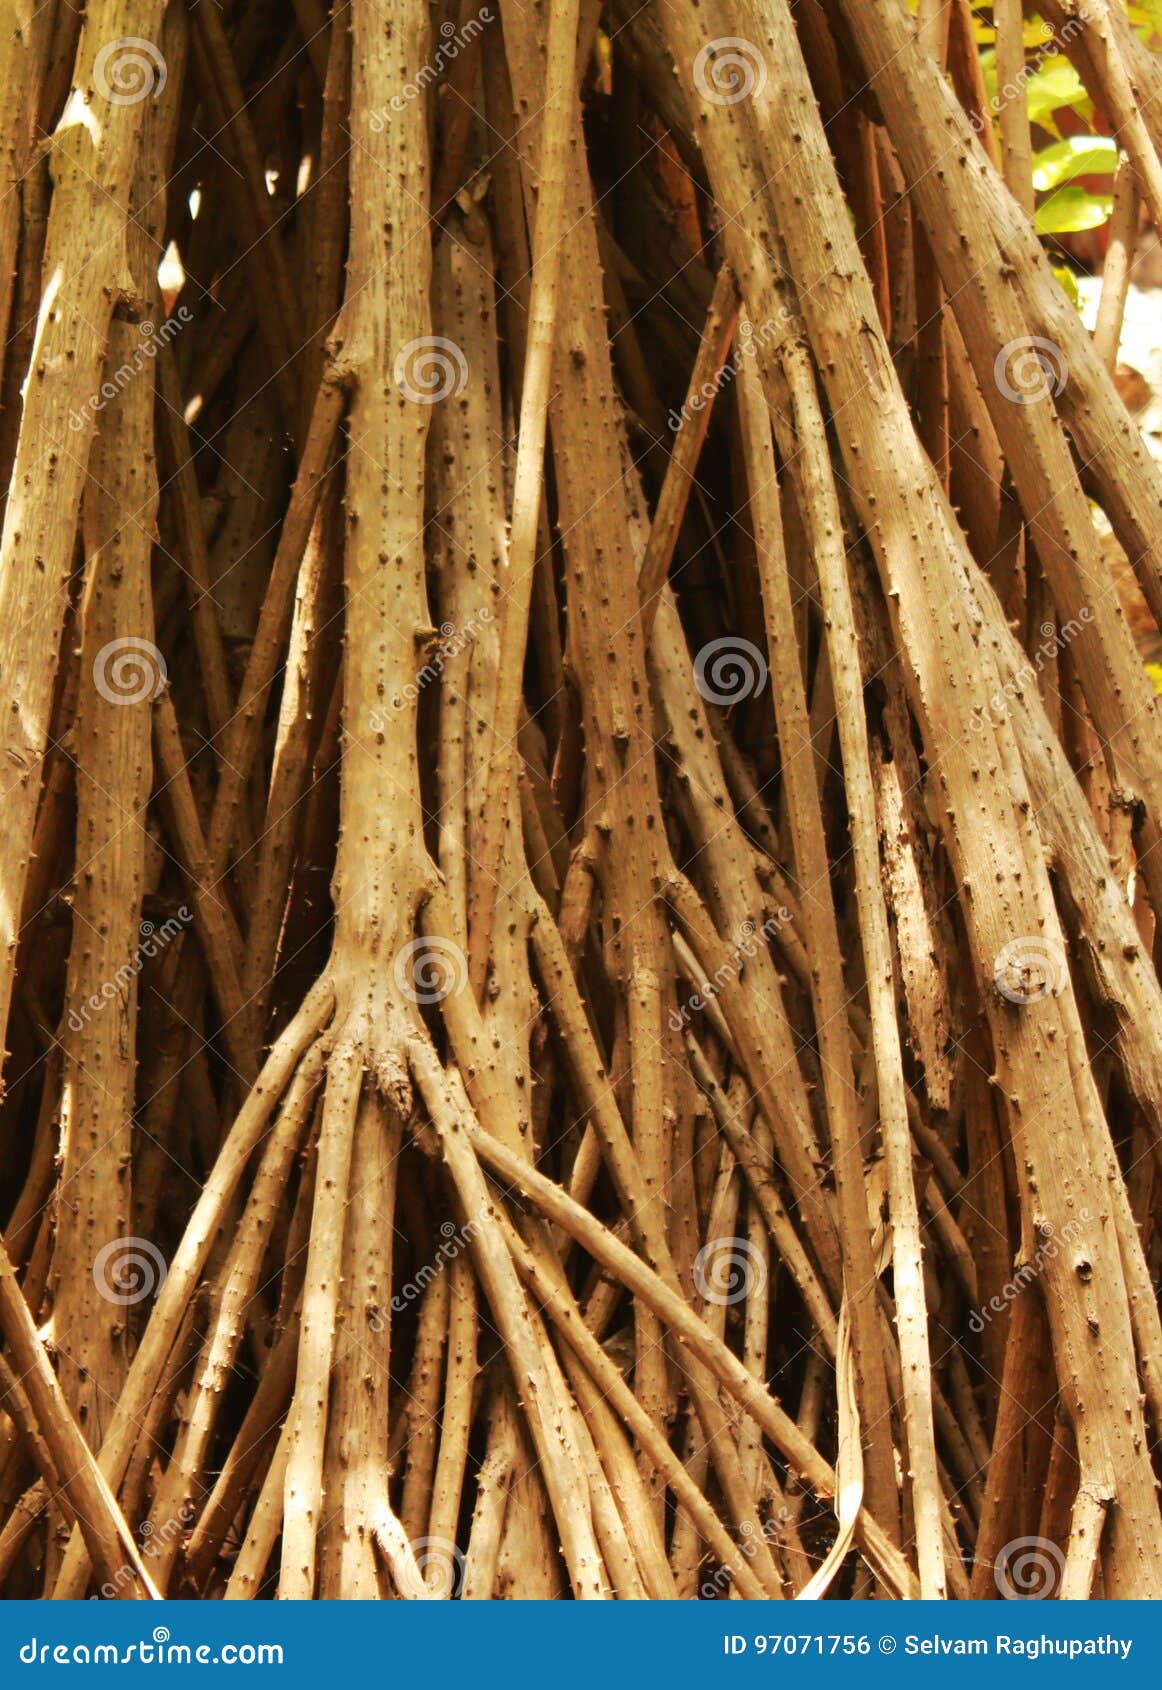 kewda plant roots